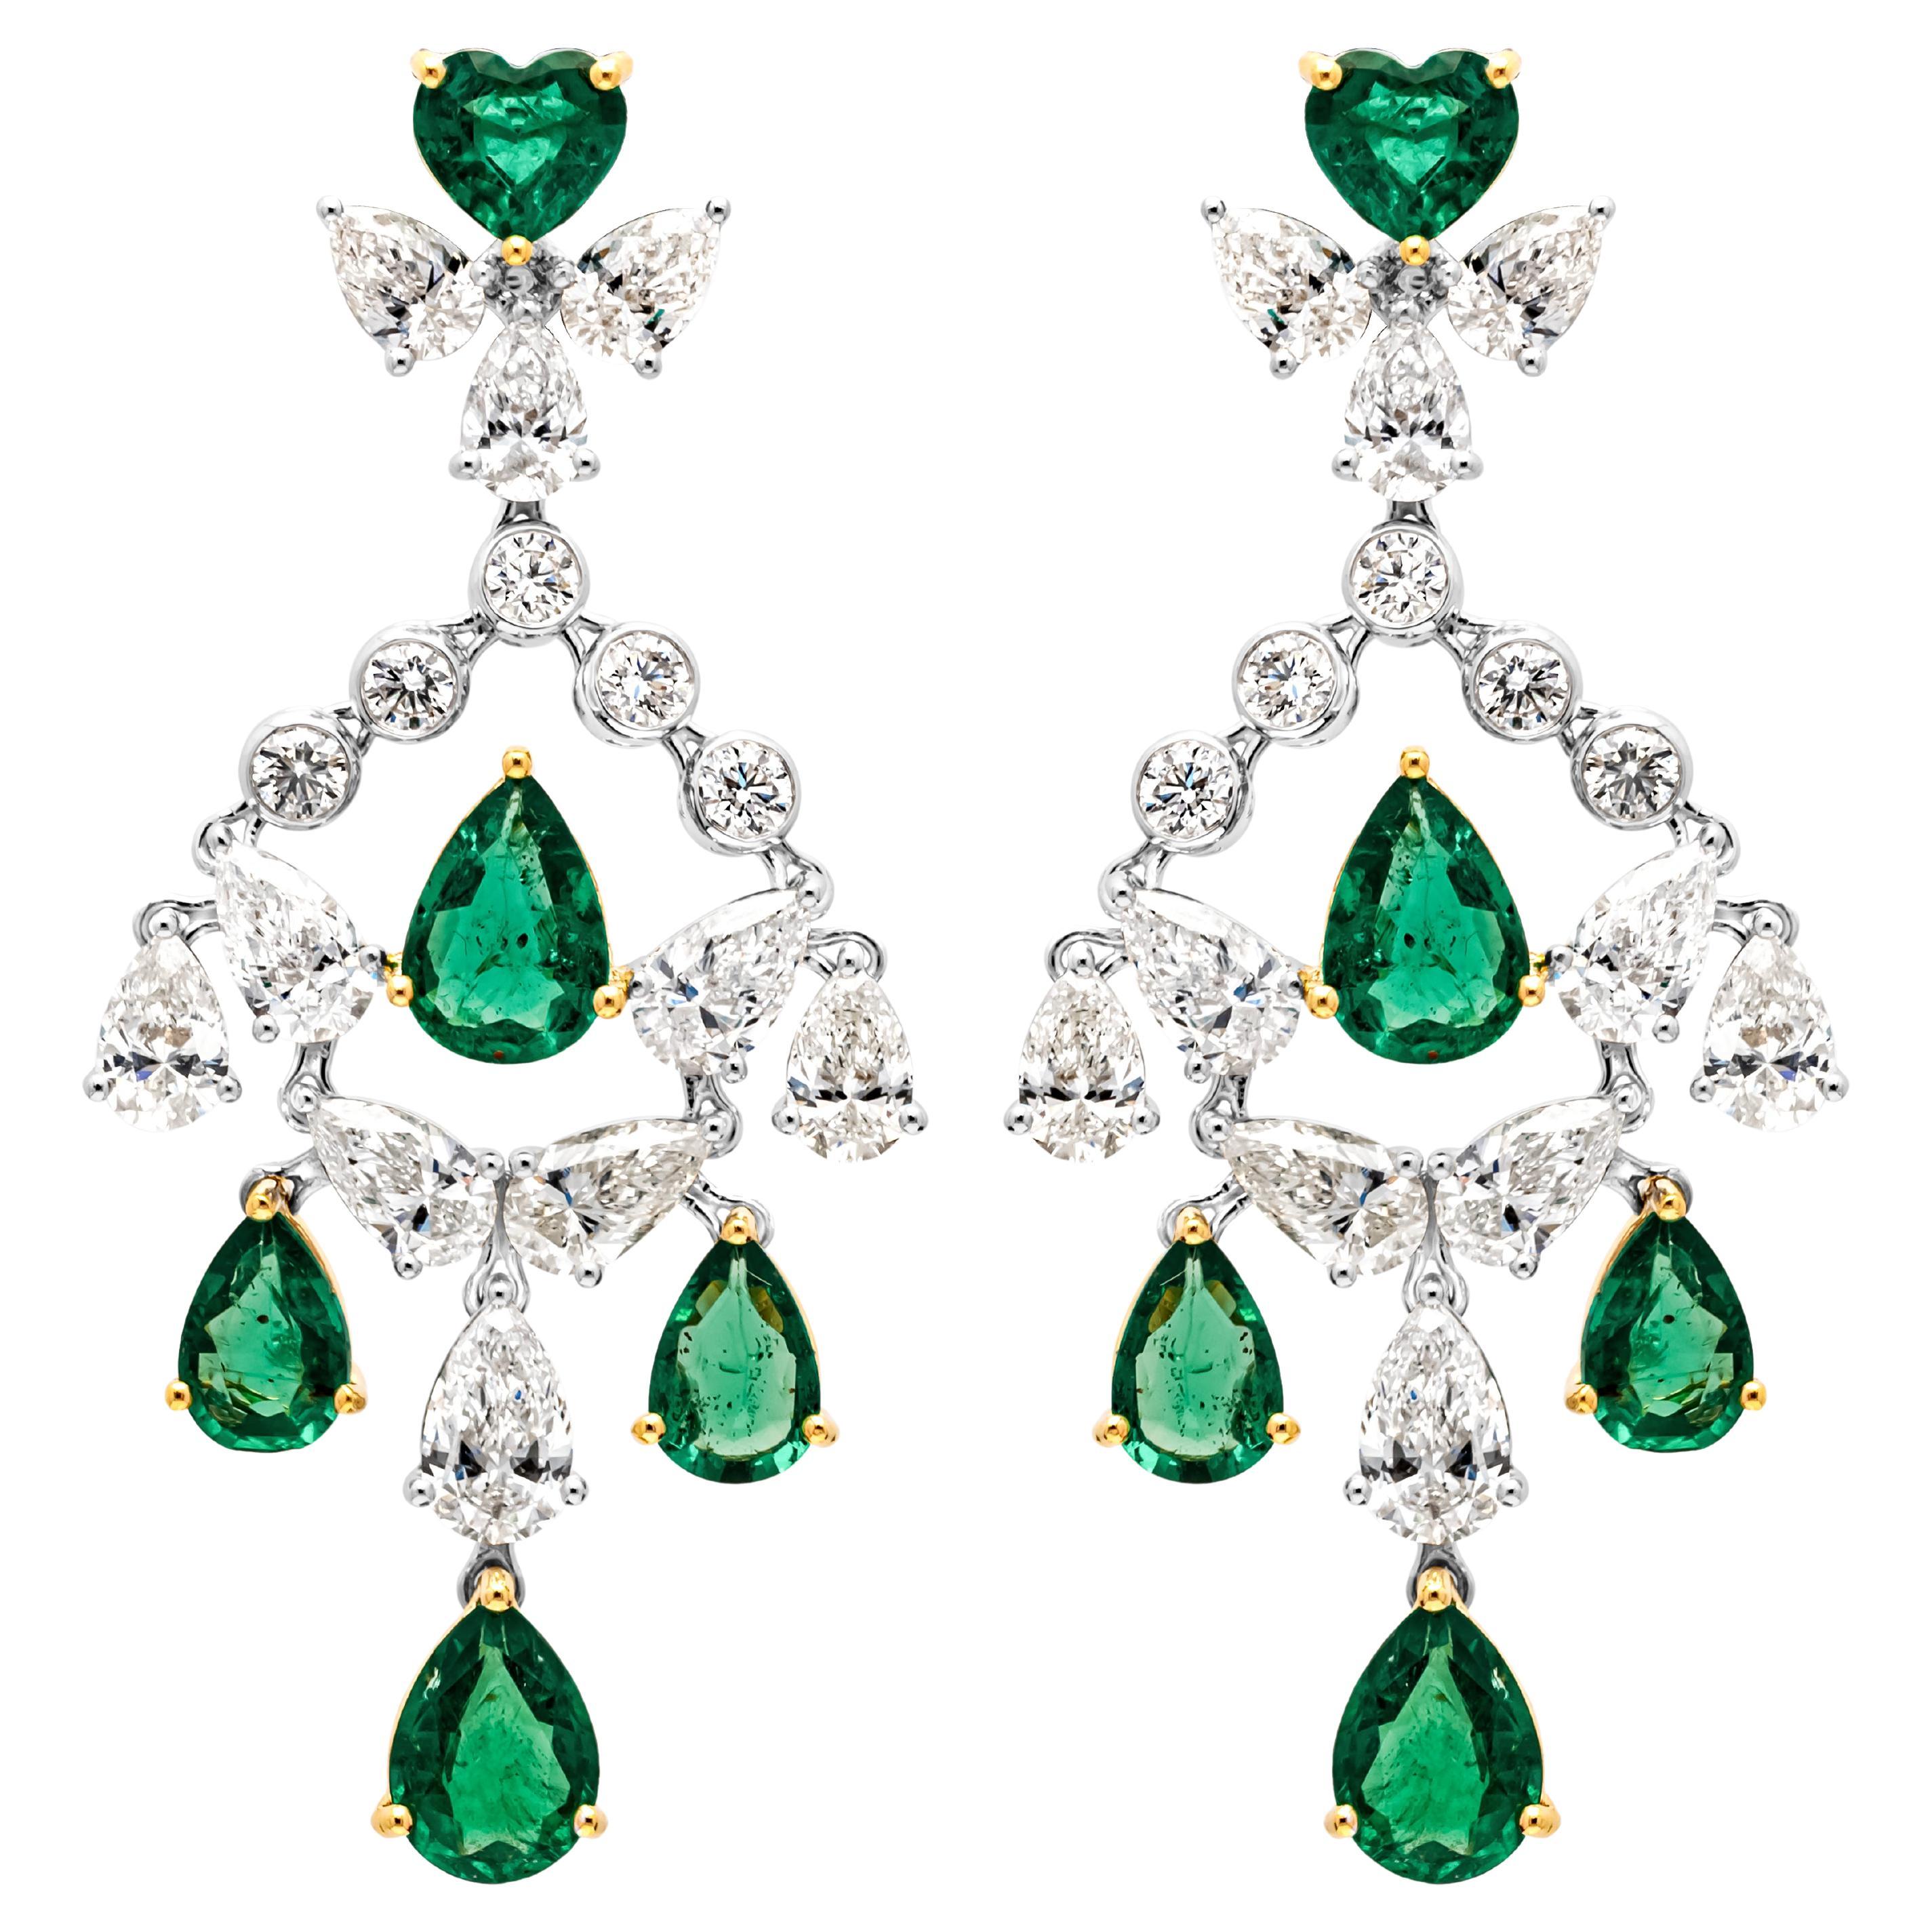 Roman Malakov 8.56 Carats Total Mixed Cut Diamond & Emerald Chandelier Earrings For Sale